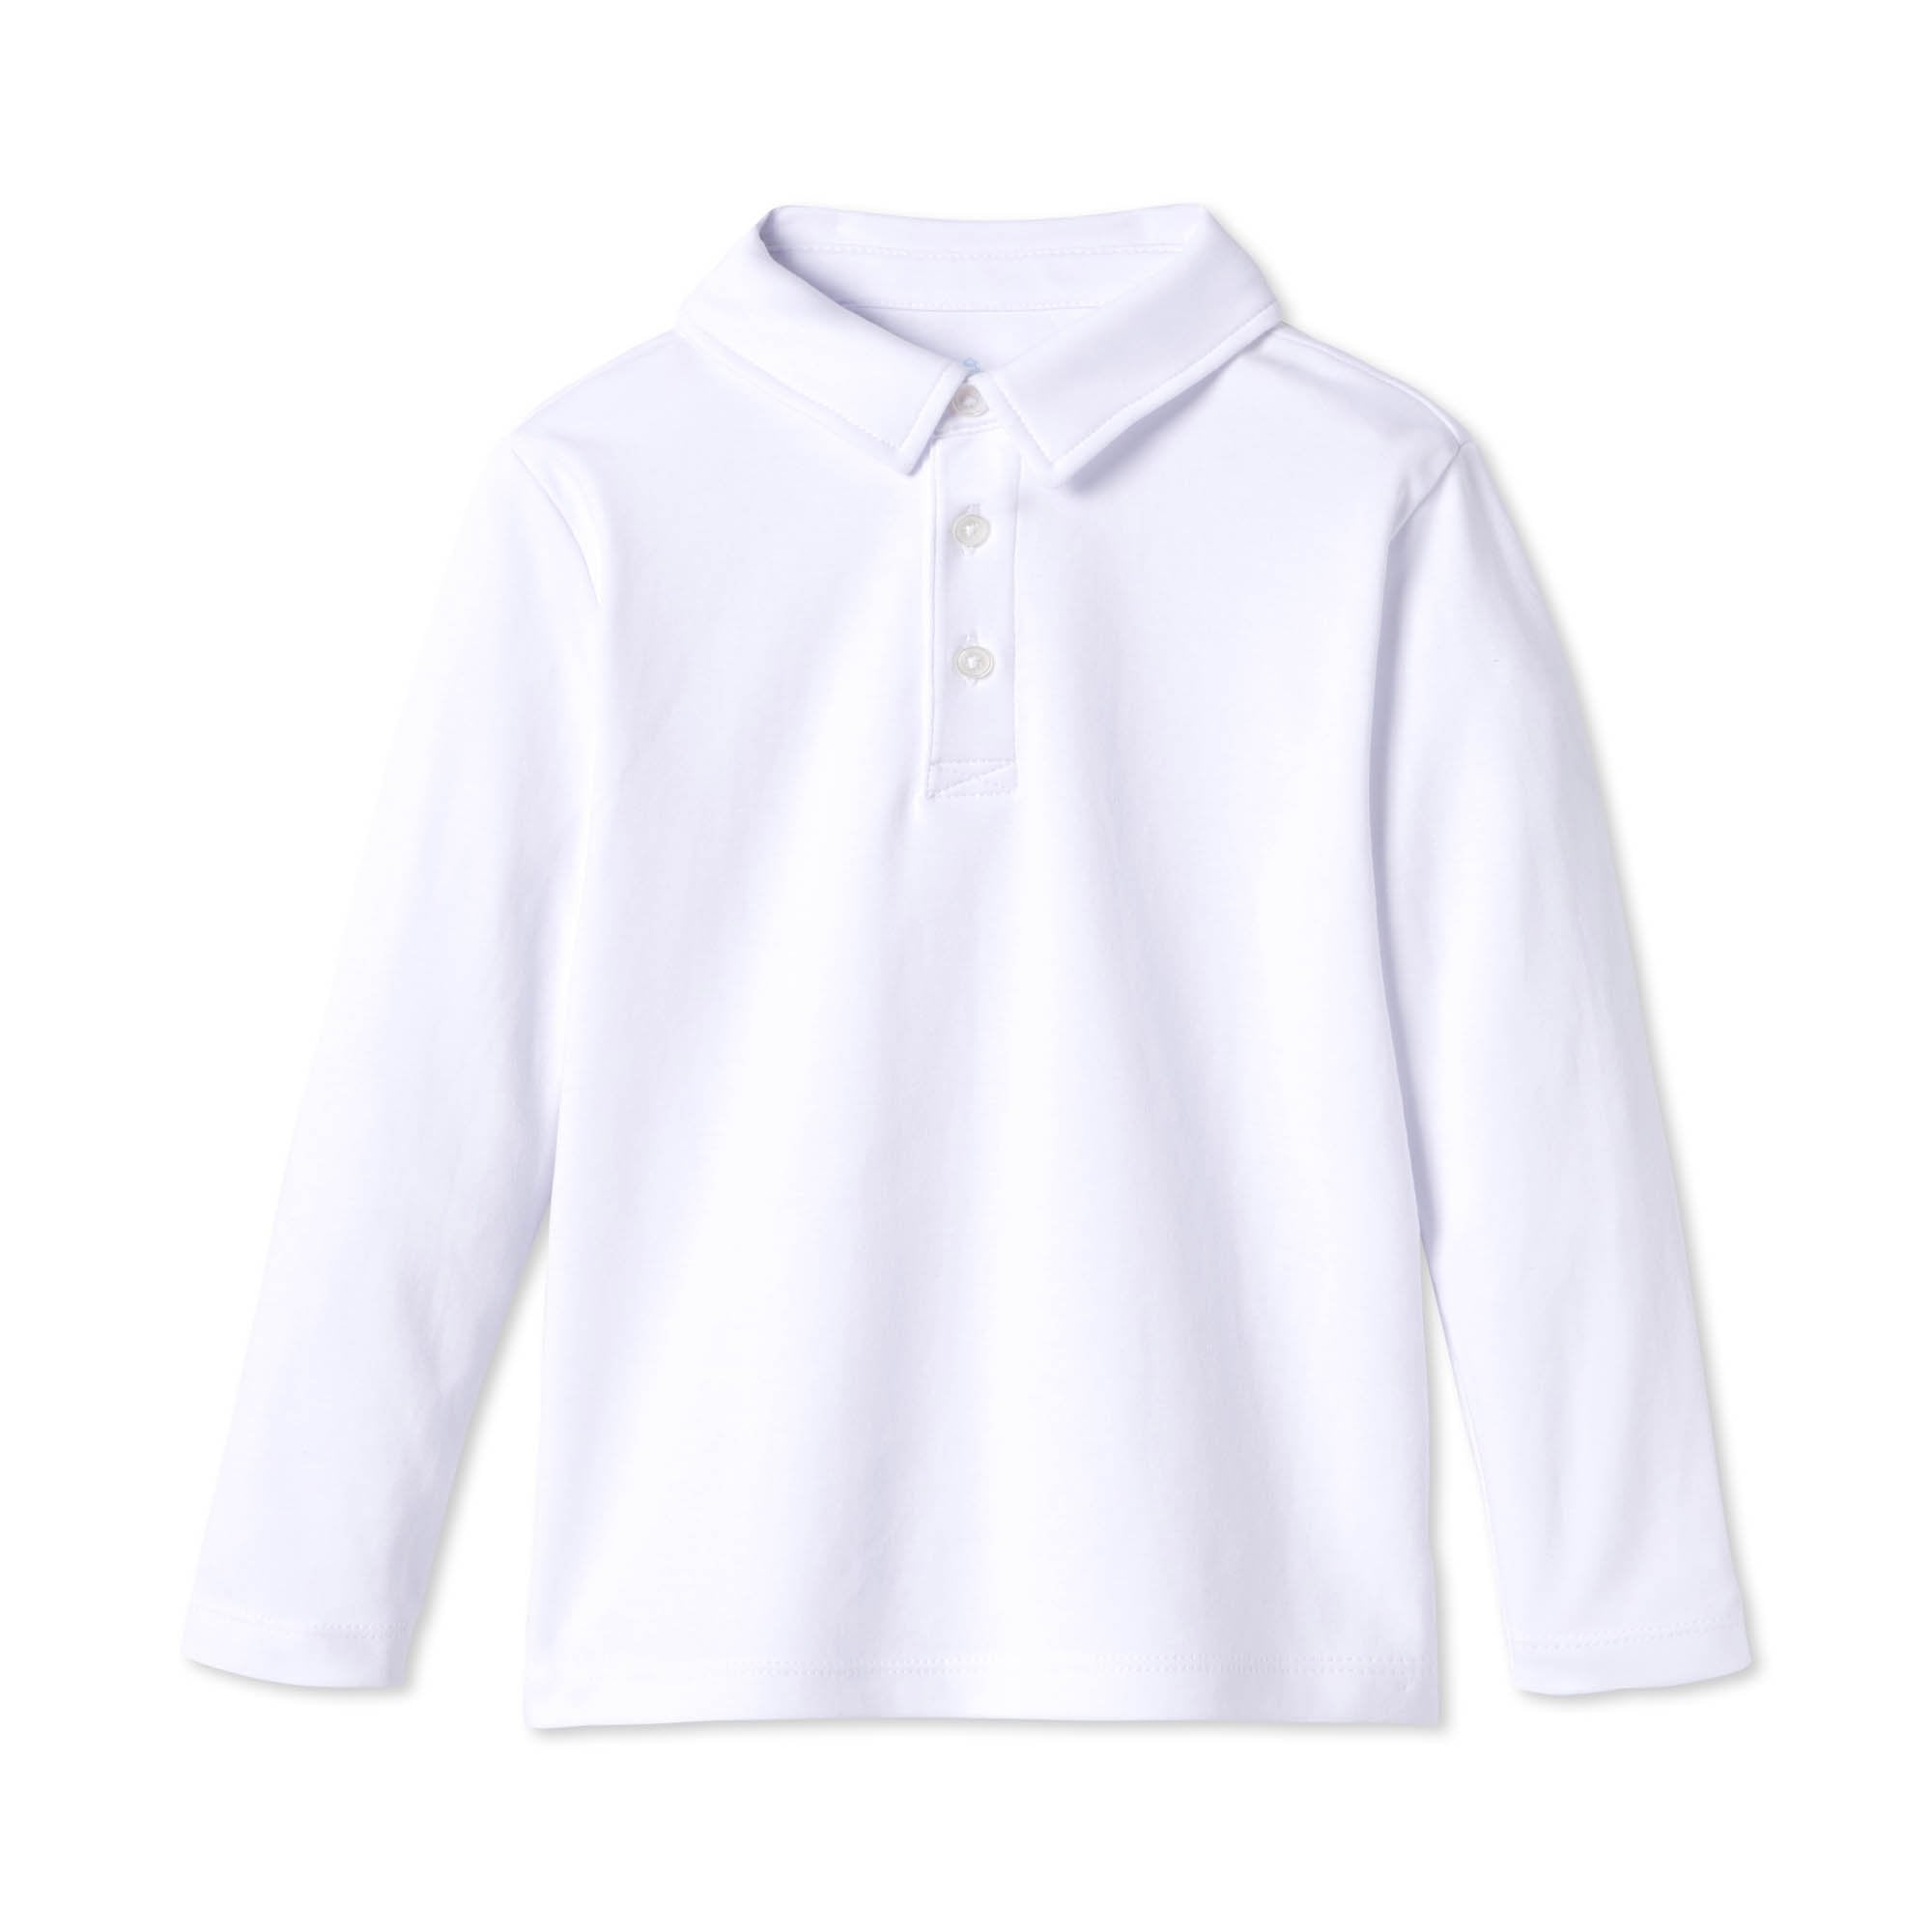 Hayden Long Sleeve Polo, Bright White 2021